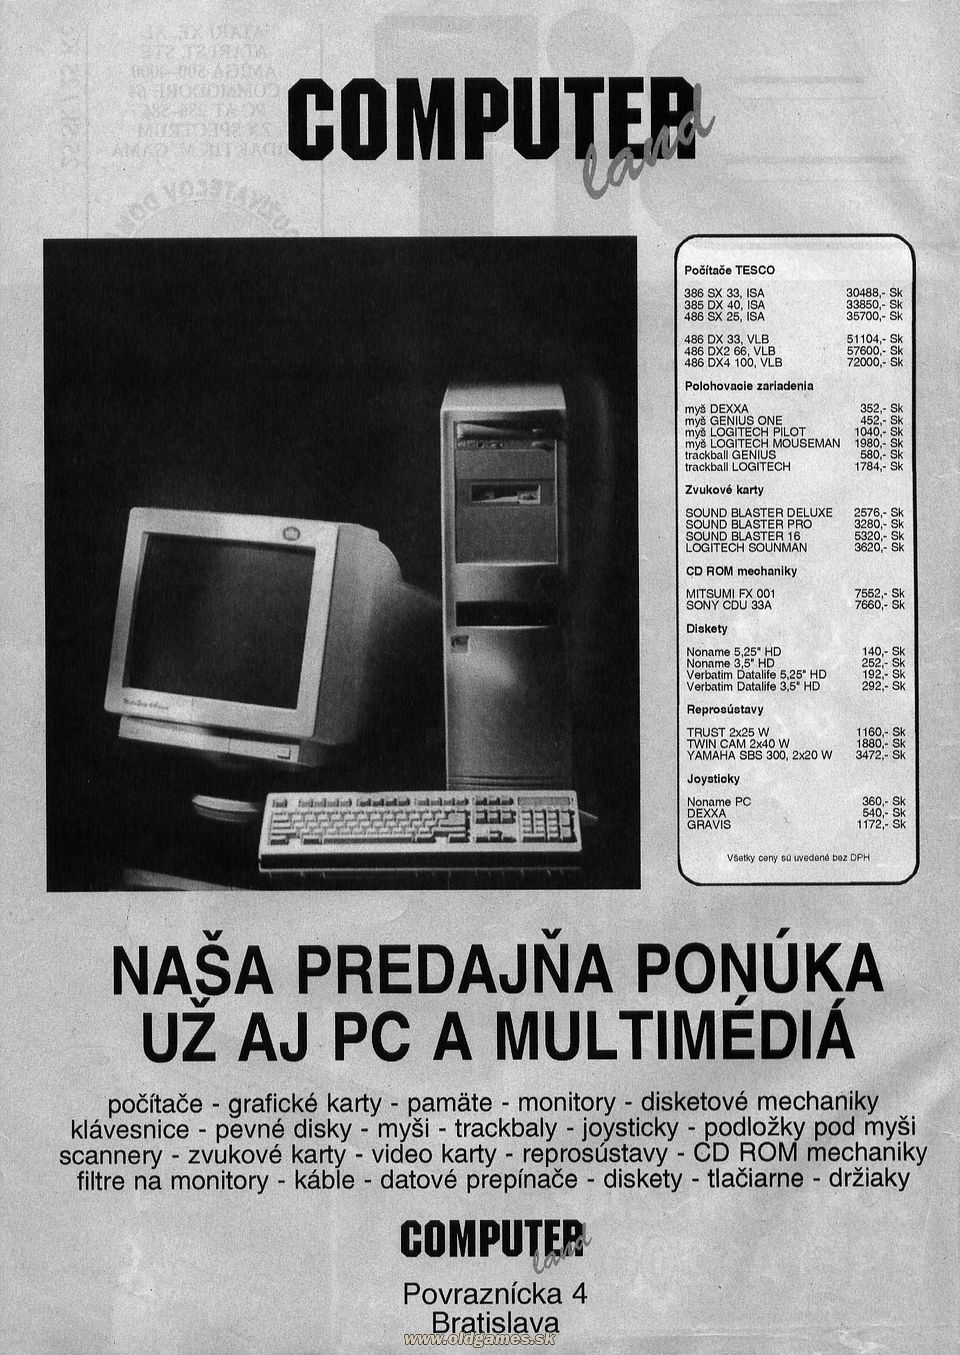 reklama: Computer land - cenník